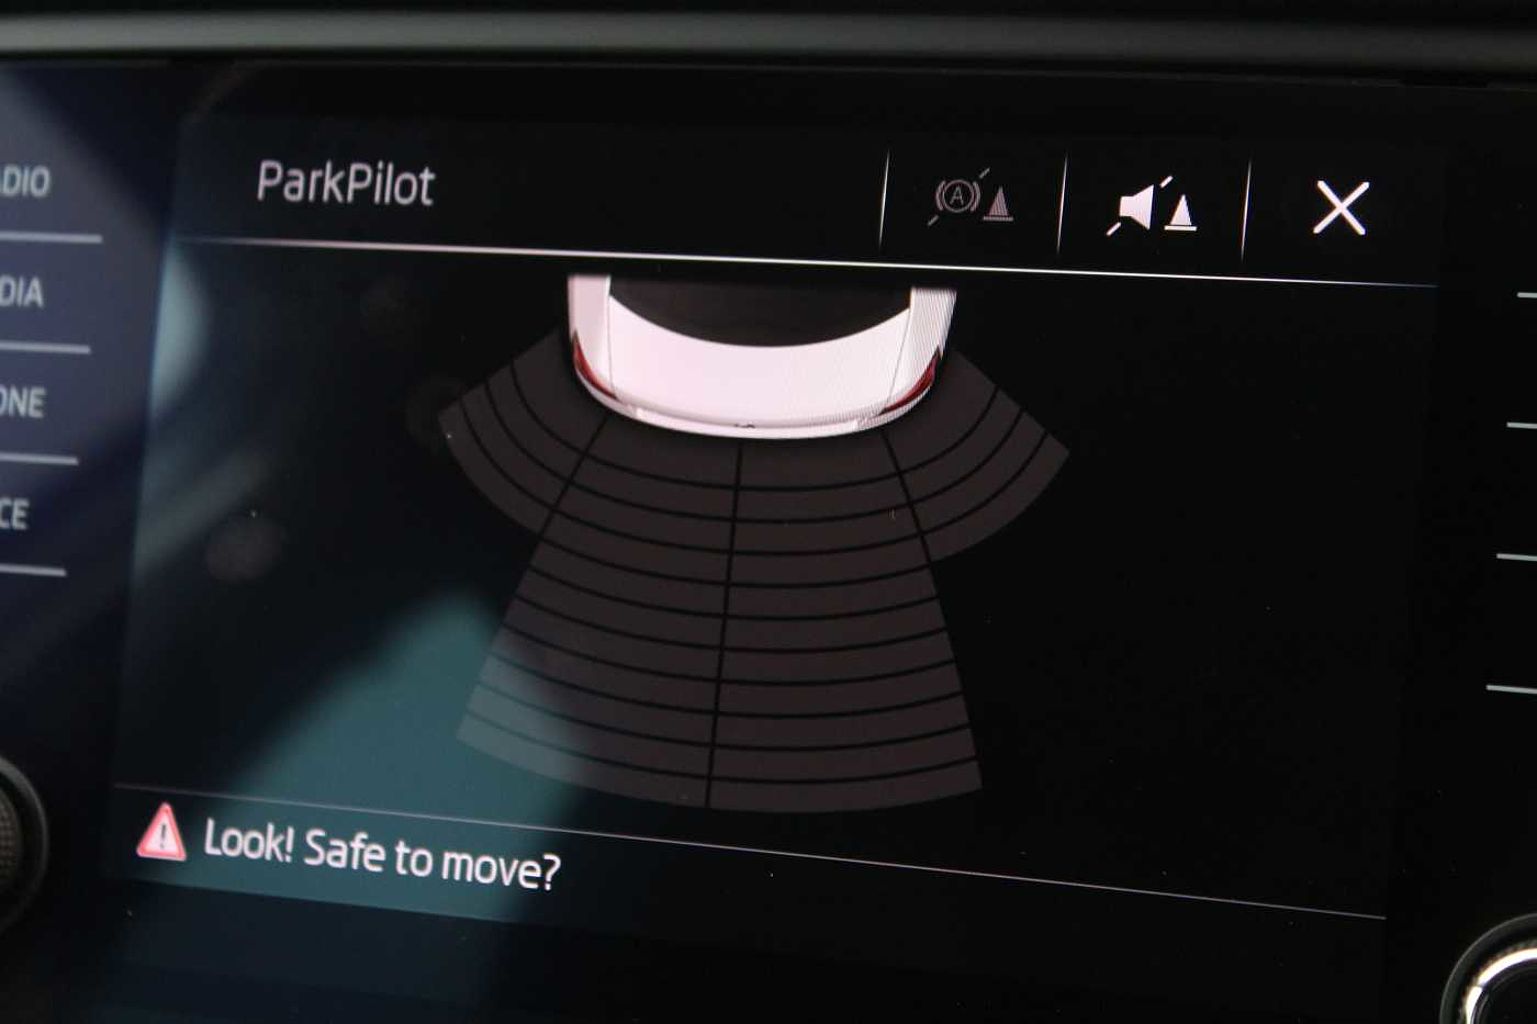 SKODA Octavia Hatchback 1.6 TDI SE L (115 PS)